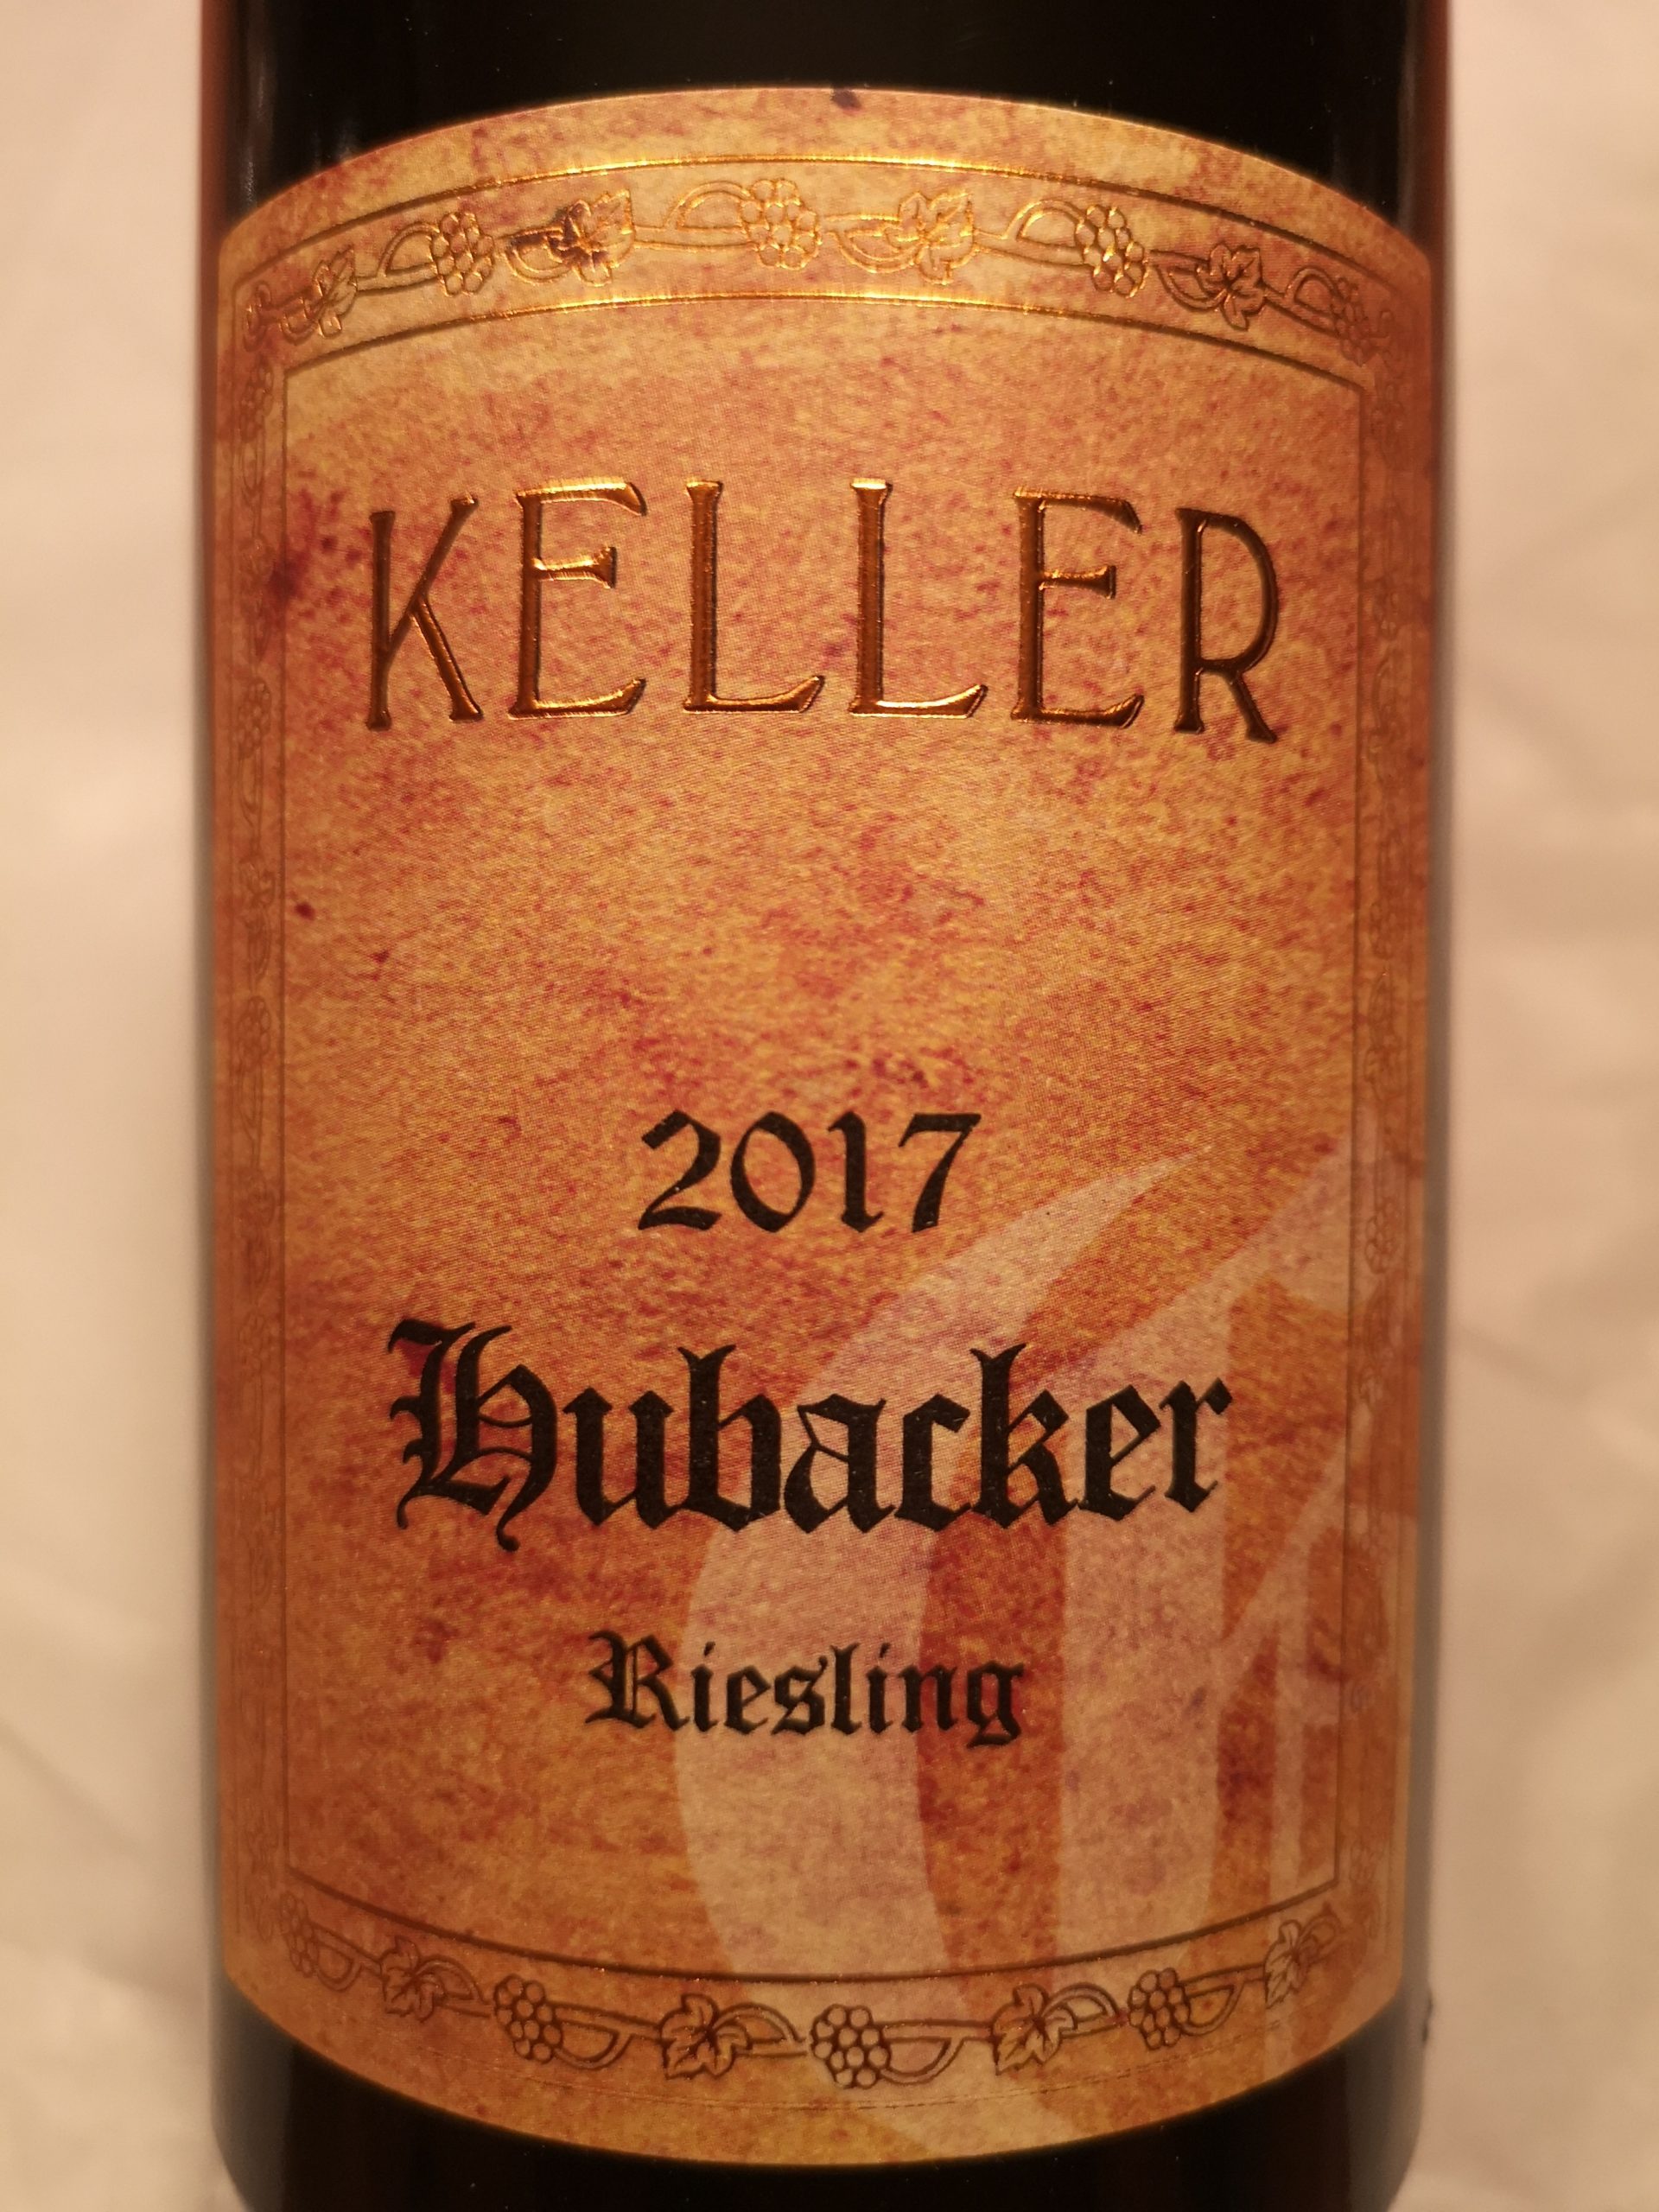 2017 Riesling Hubacker GG | Keller